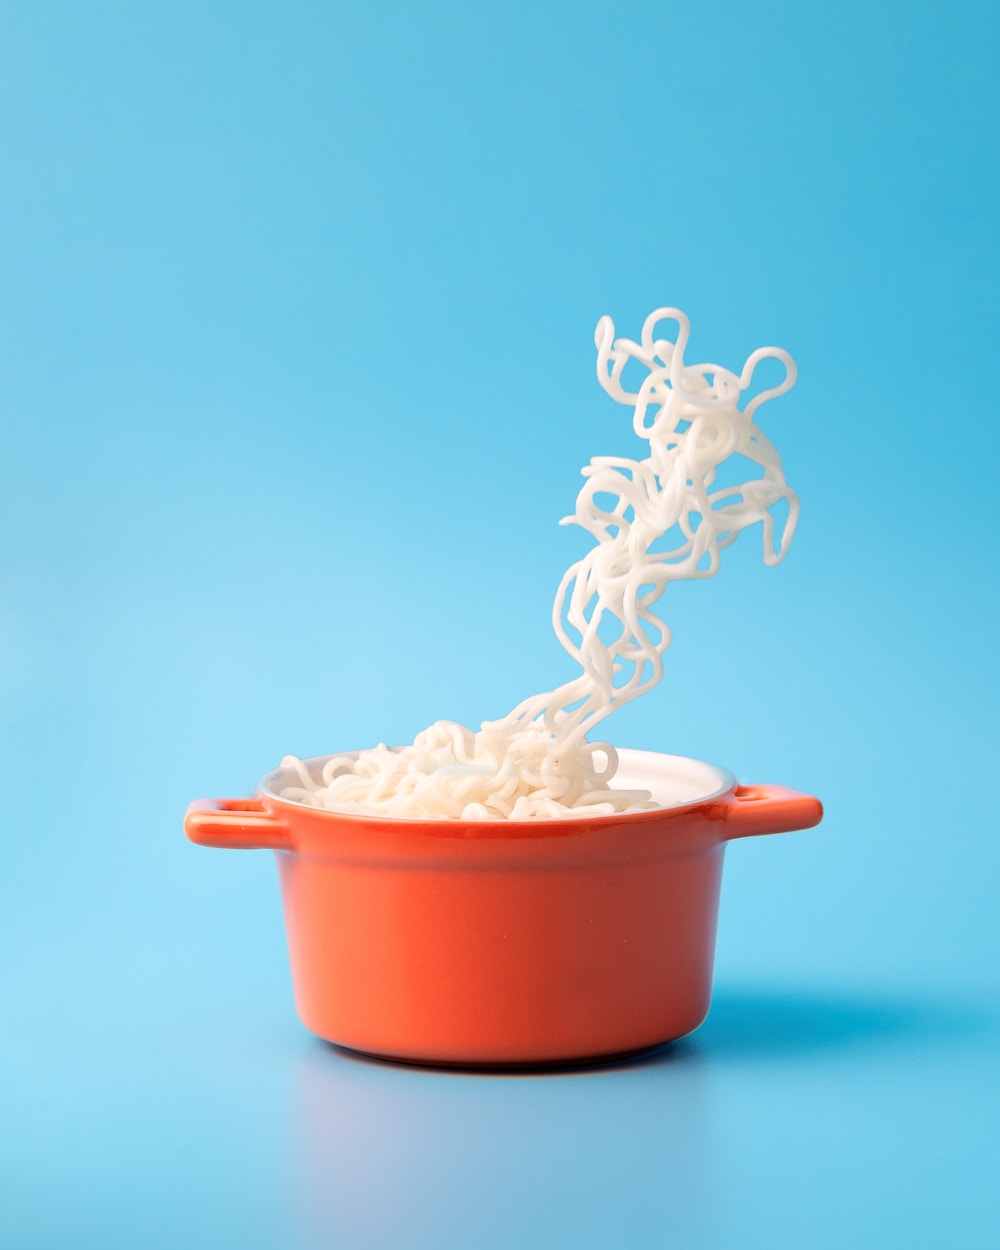 Noodles in an orange pot